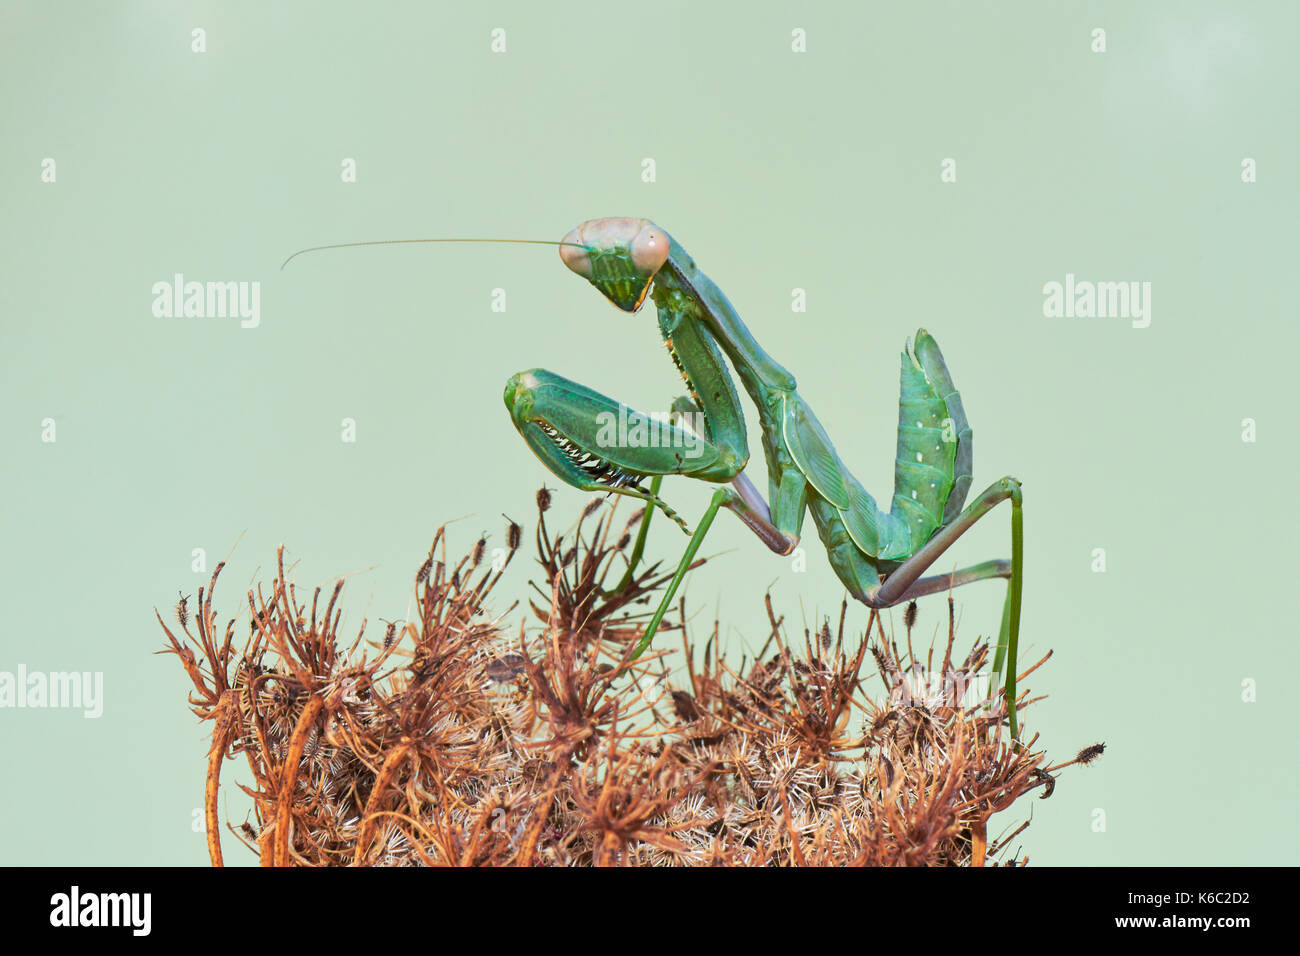 Europäische gottesanbeterin oder Gottesanbeterin (Mantis Religiosa), Benalmadena, Provinz Malaga, Andalusien, Spanien. Stockfoto